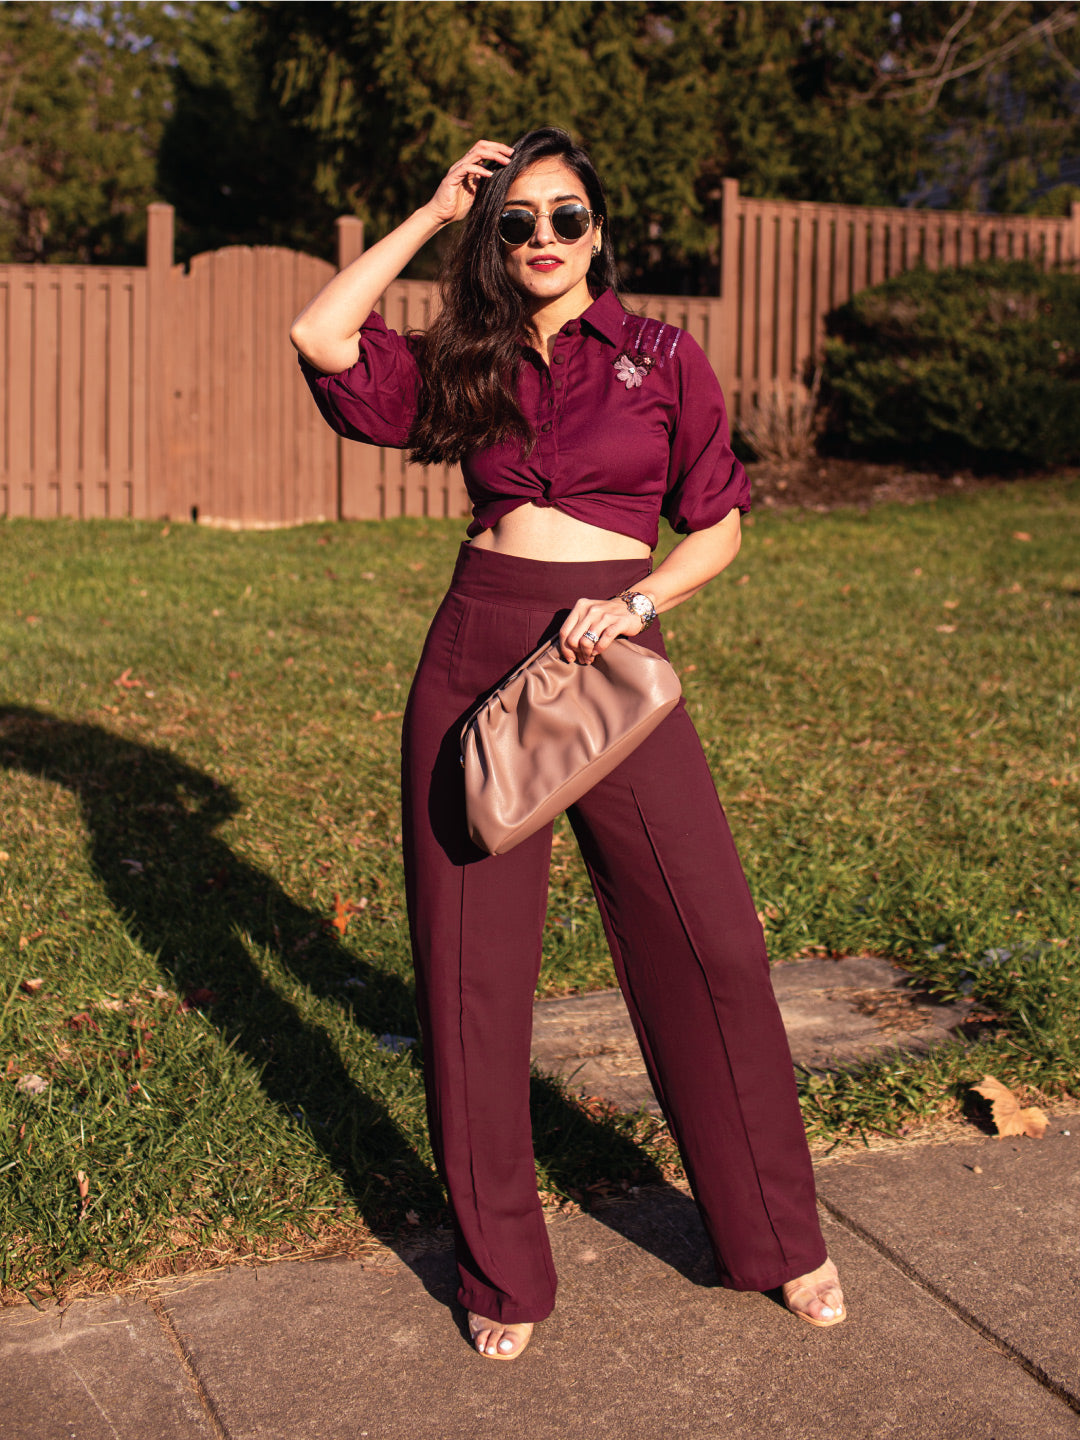 How to wear maroon pants - Quora